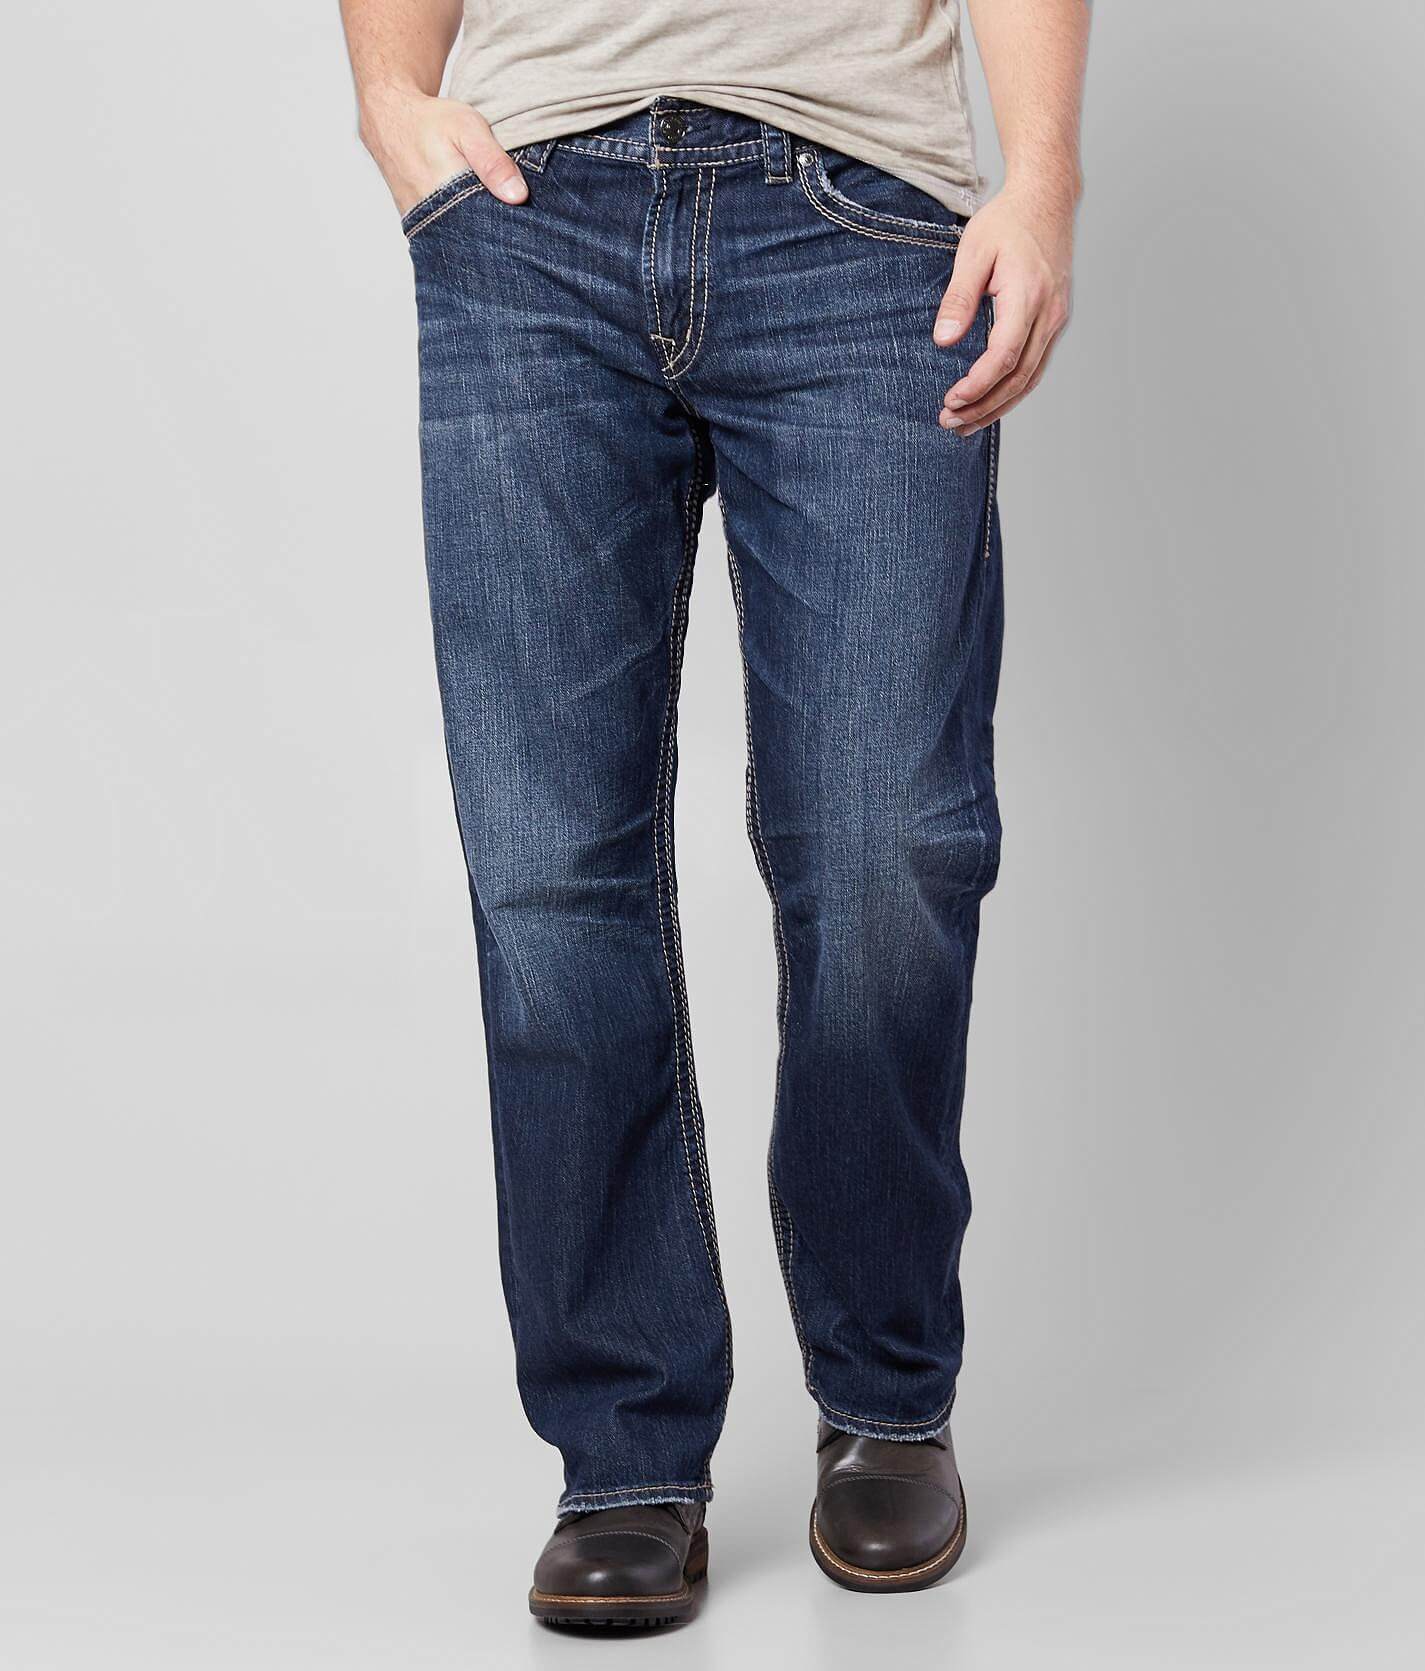 silver gordie jeans canada